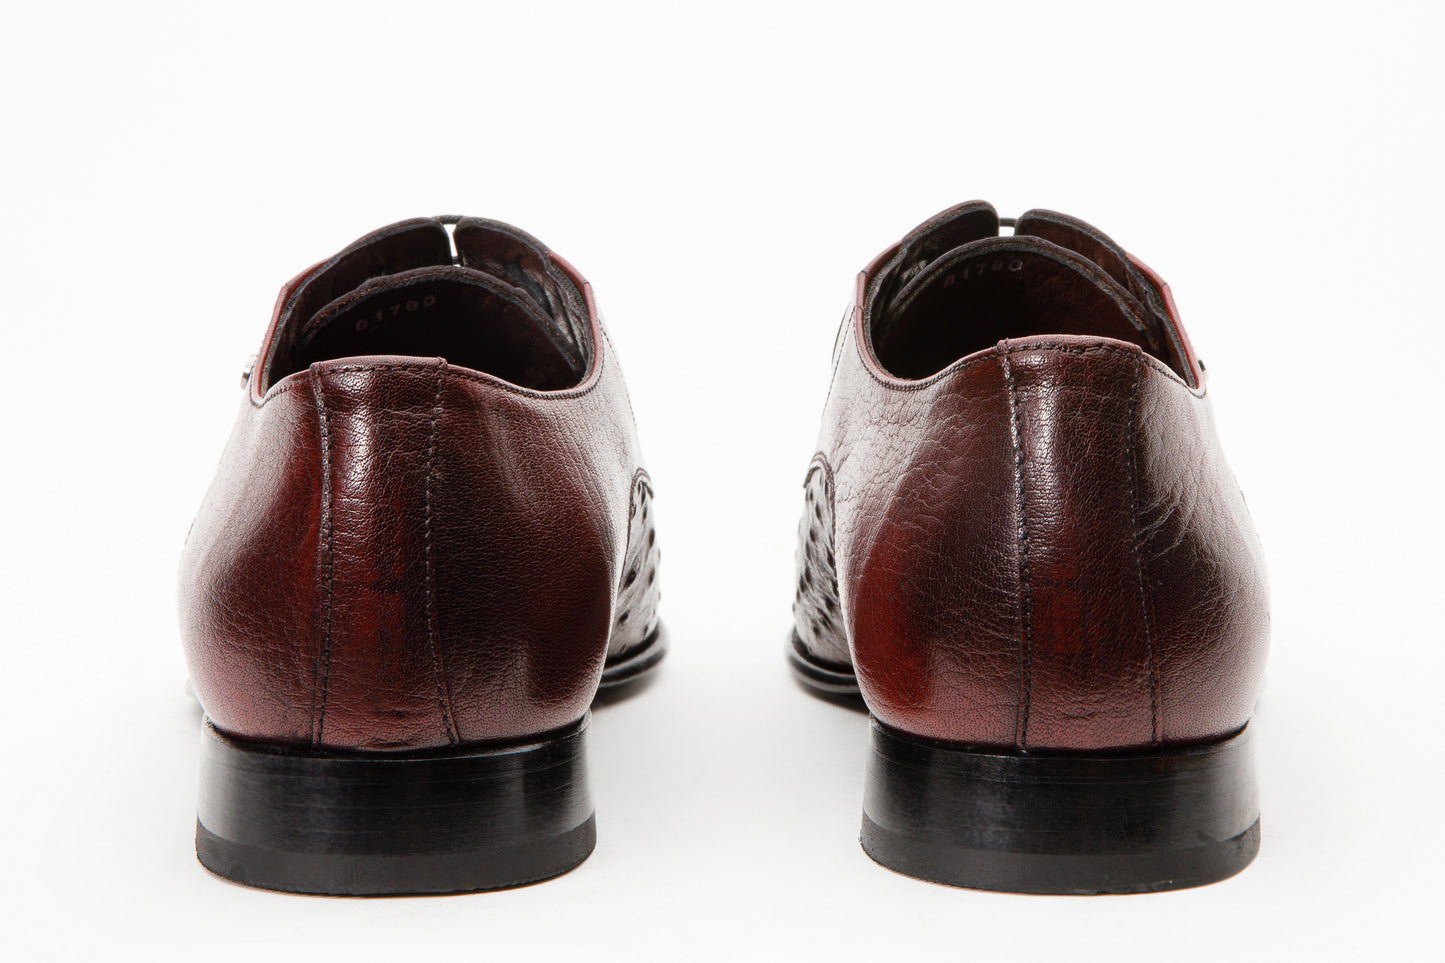 The Porto Alegre Burgundy Leather Derby Men Shoe